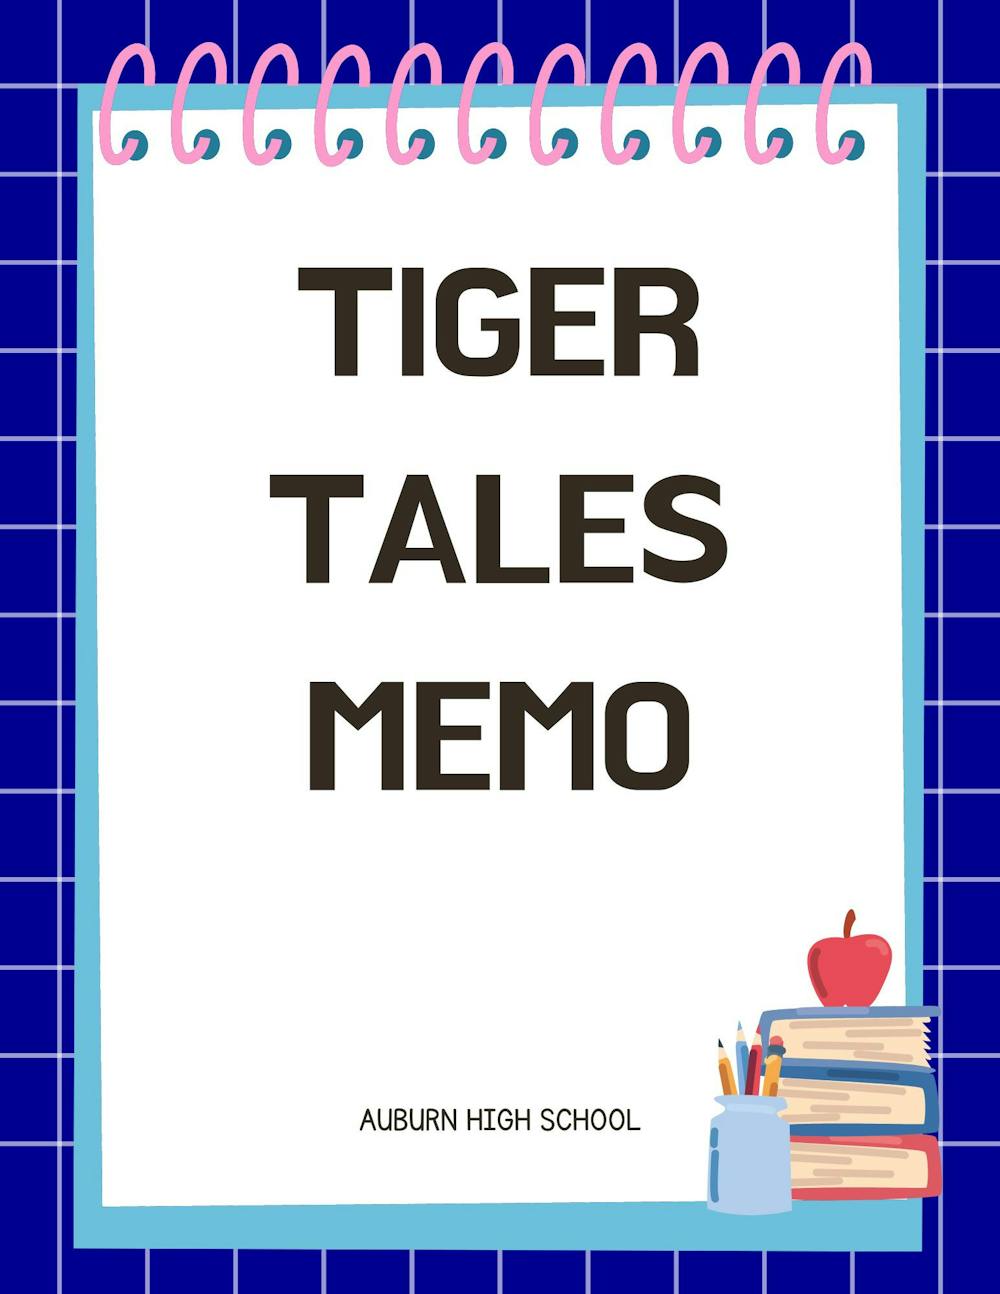 Auburn High School Tiger Tales Memo